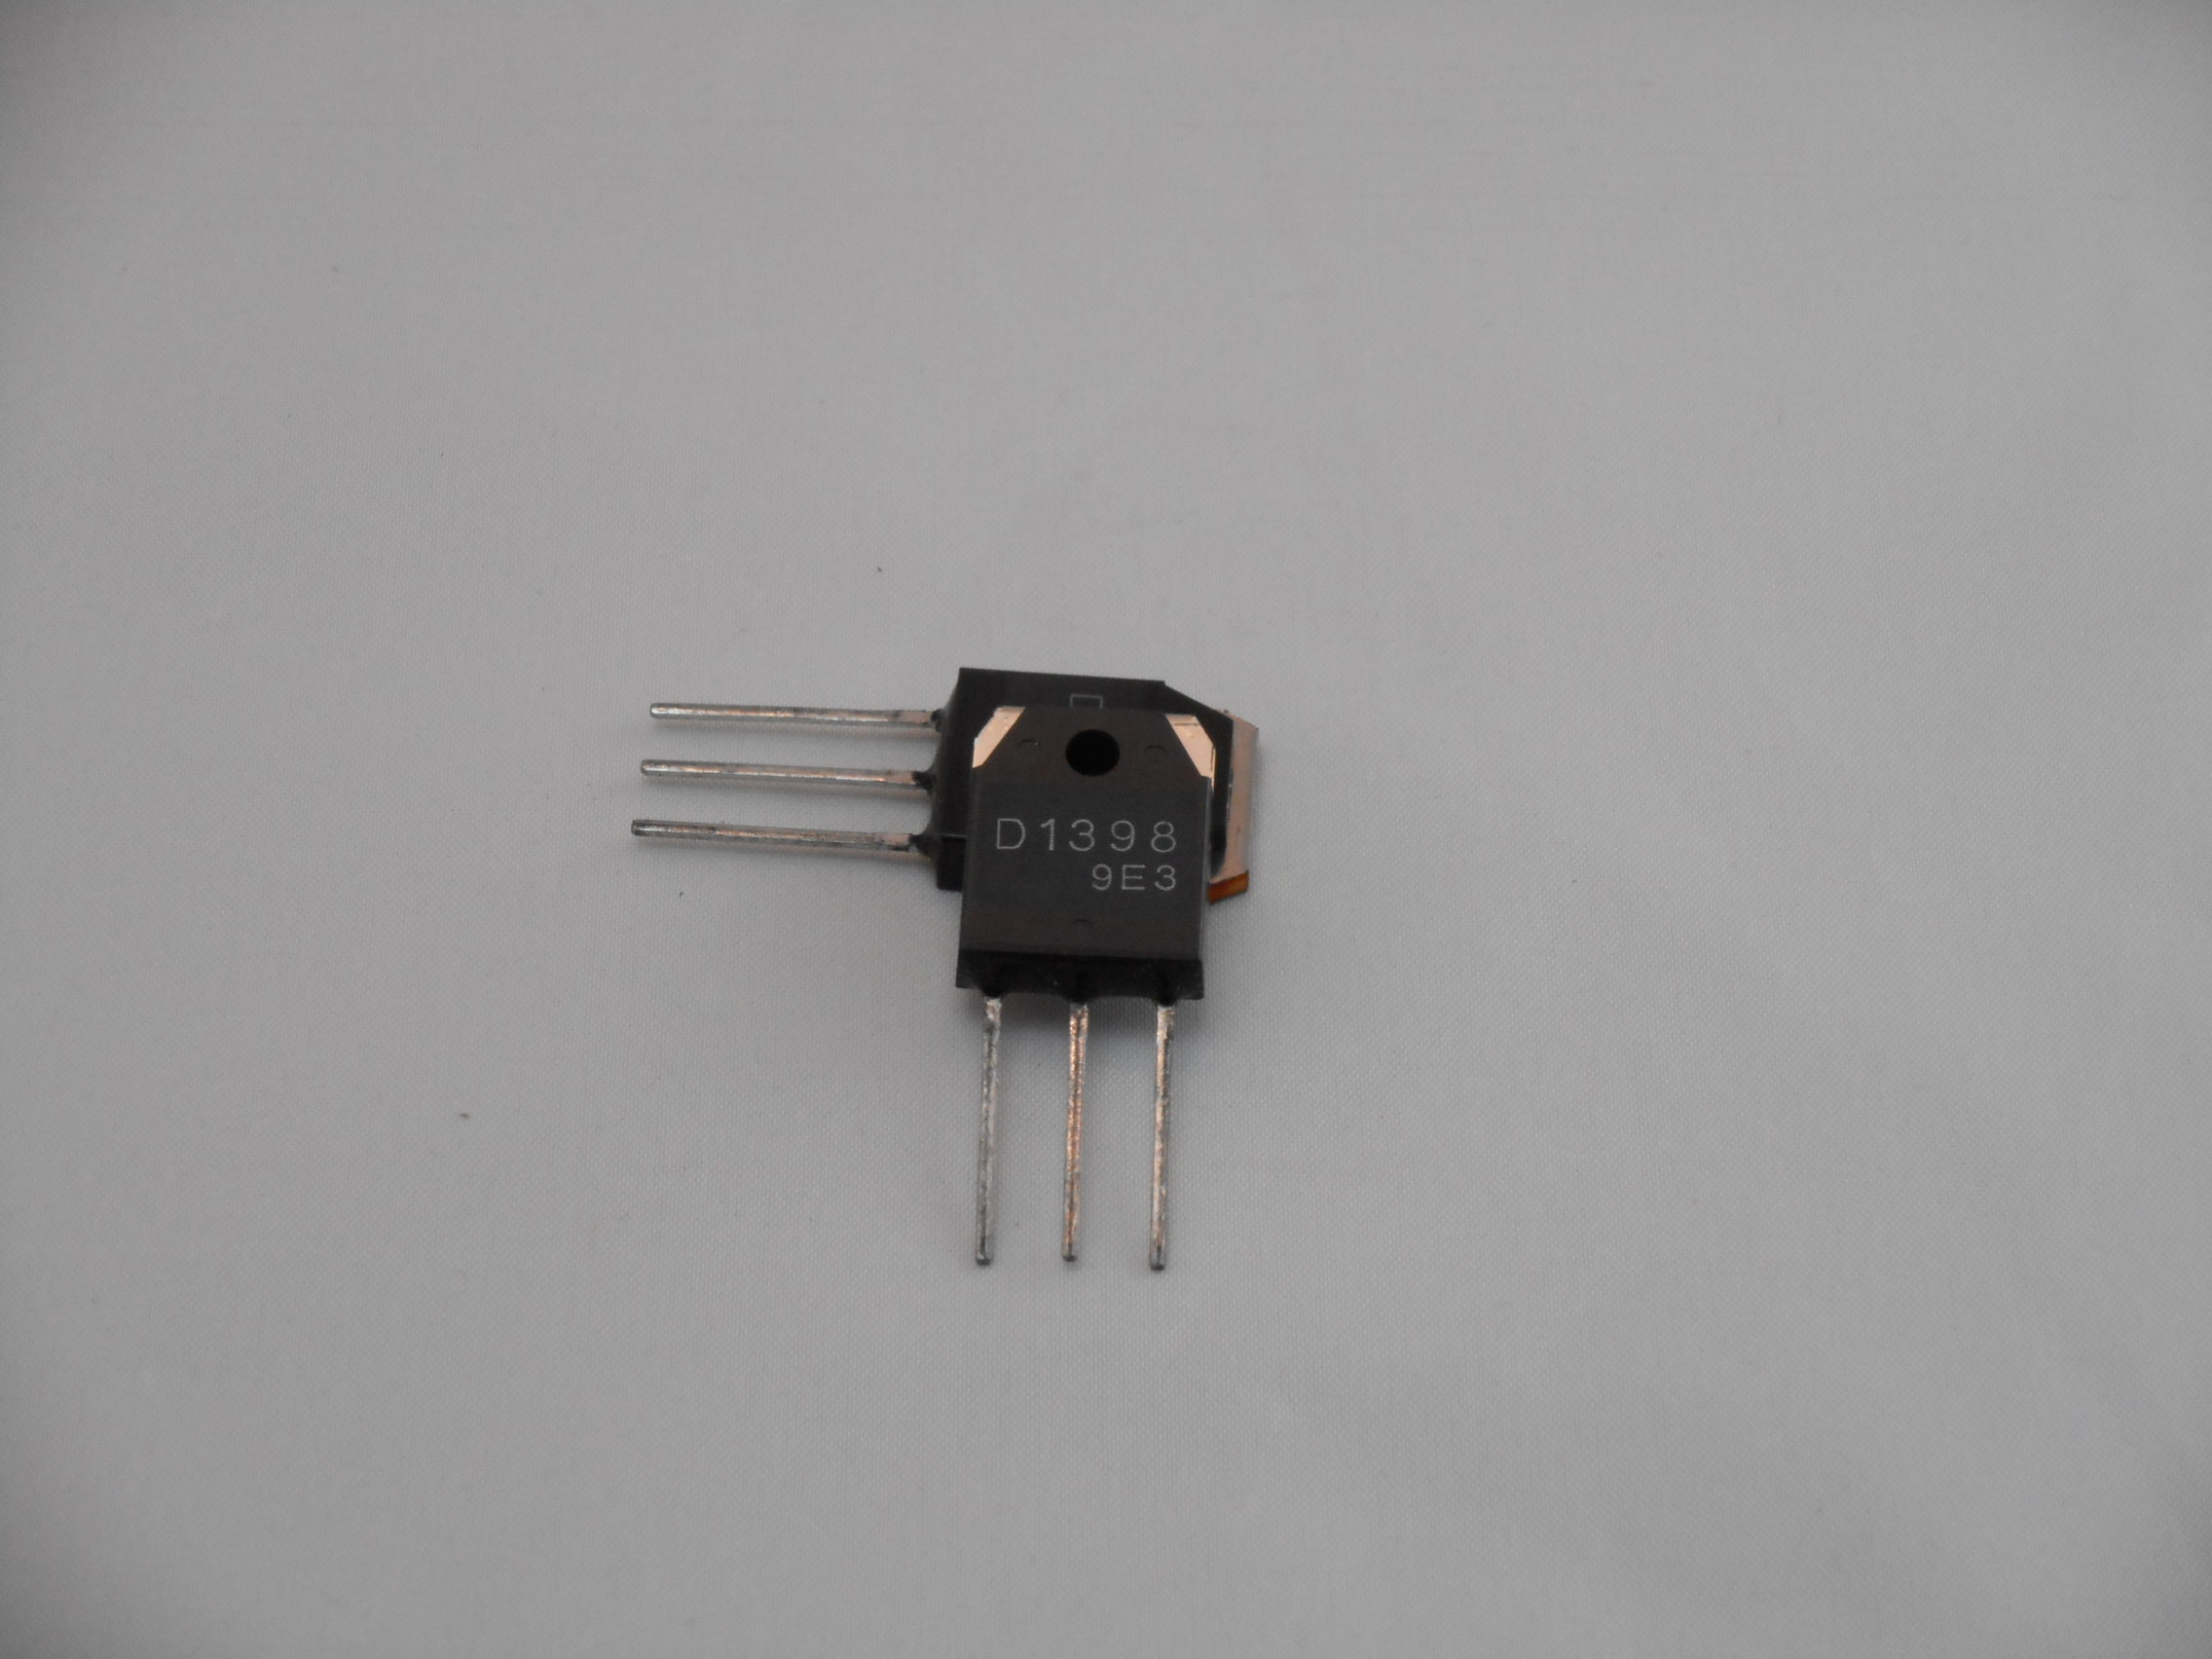 2SD1398 Original SANYO Silicon NPN Power Transistor D1398 for sale online